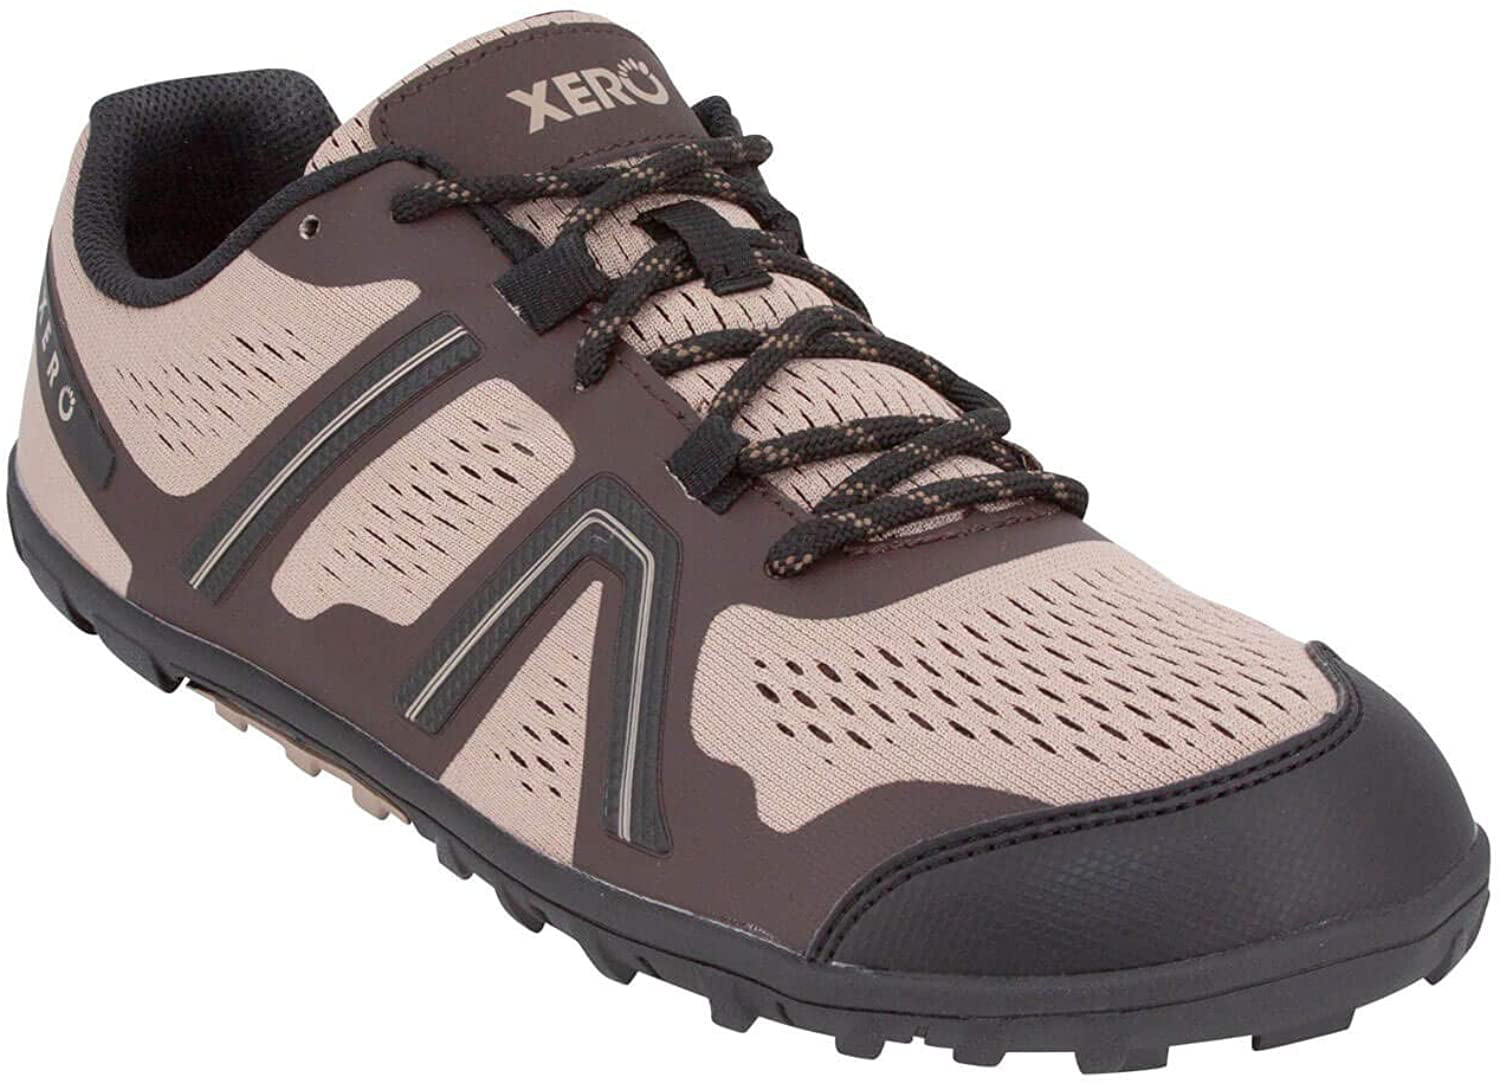 Zero Drop Minimalist Mens Lightweight Shoe Sandal for Trails Xero Shoes Colorado Barefoot-inspried Water 